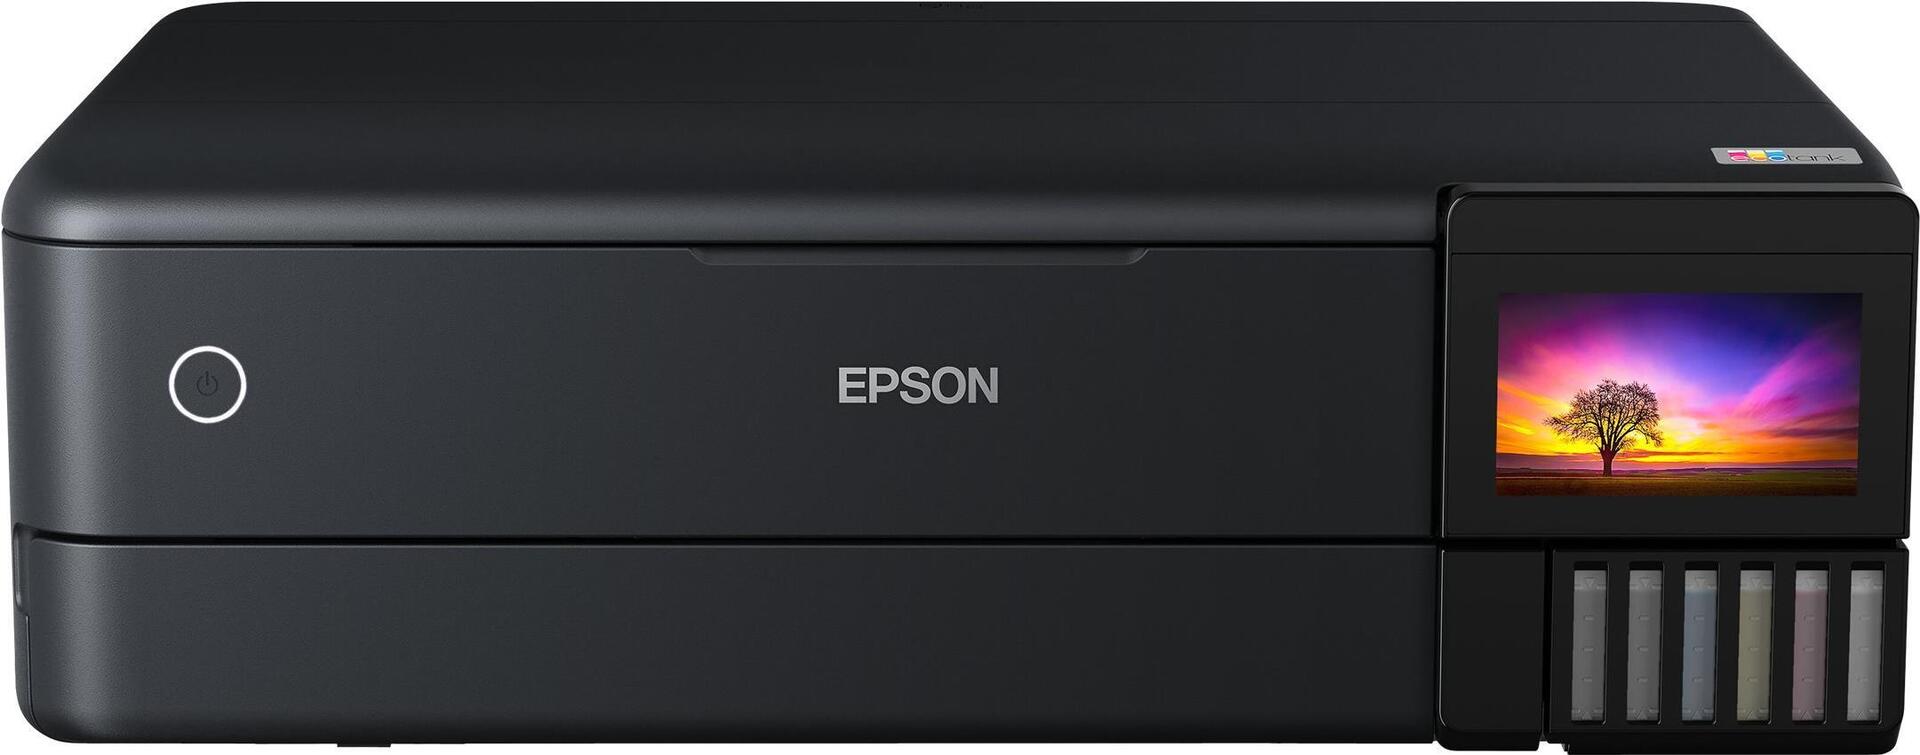 Epson Ecotank Et 8550 Multifunktionsdrucker Farbe C11cj21401 4749